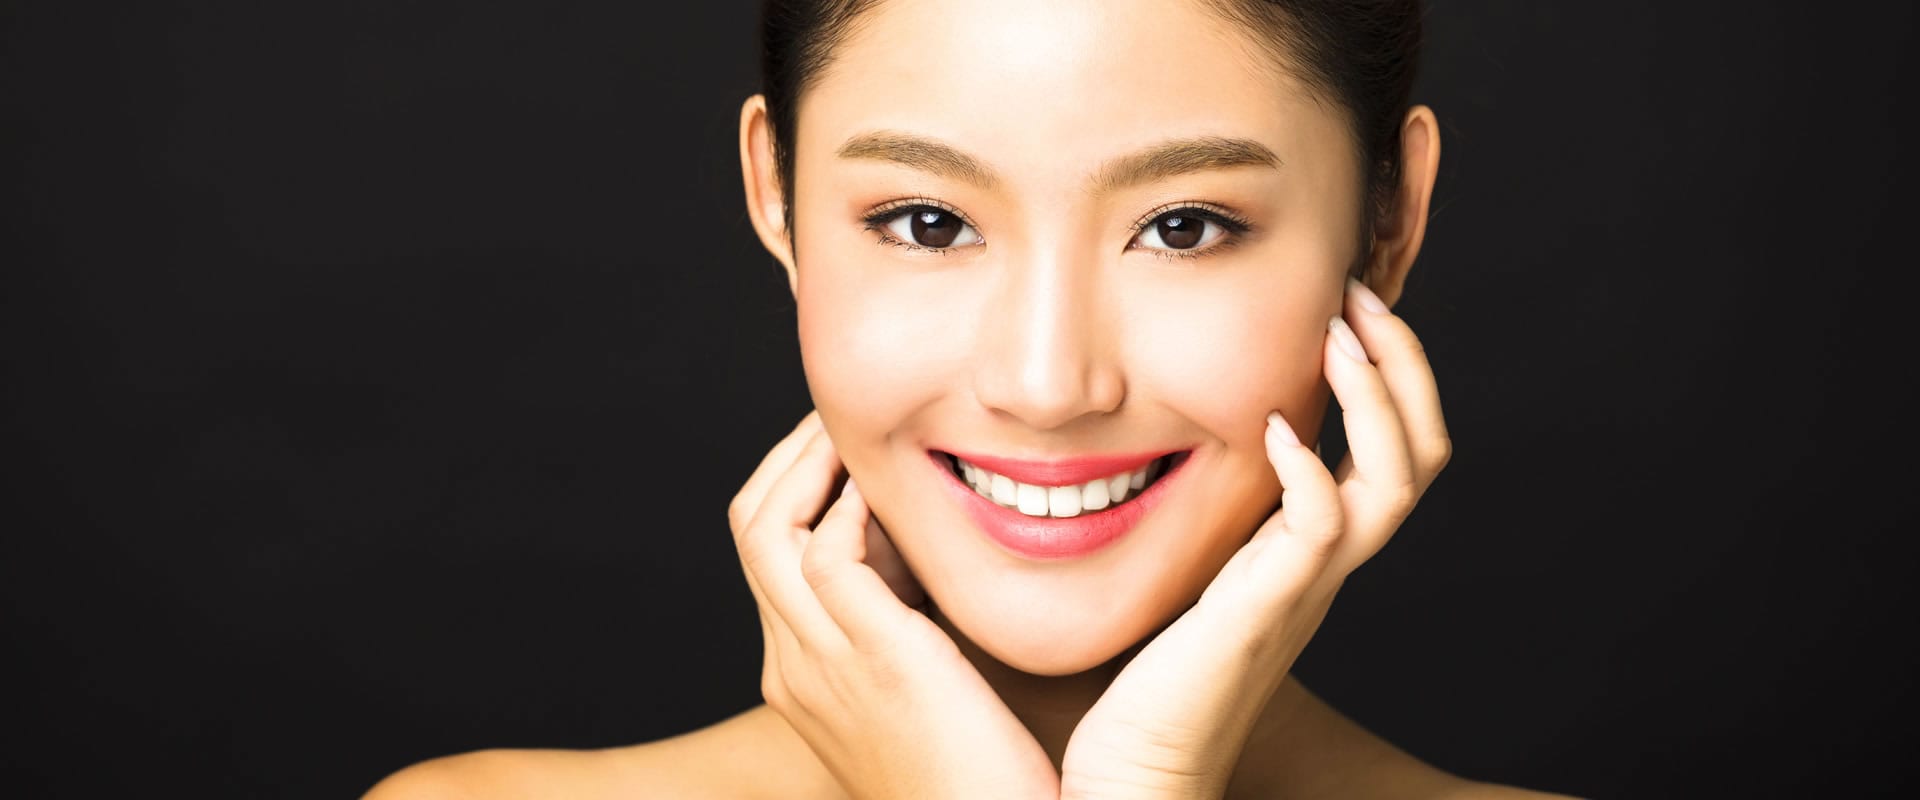 Cosmetic Regenerative Medicine for Beautiful Skin